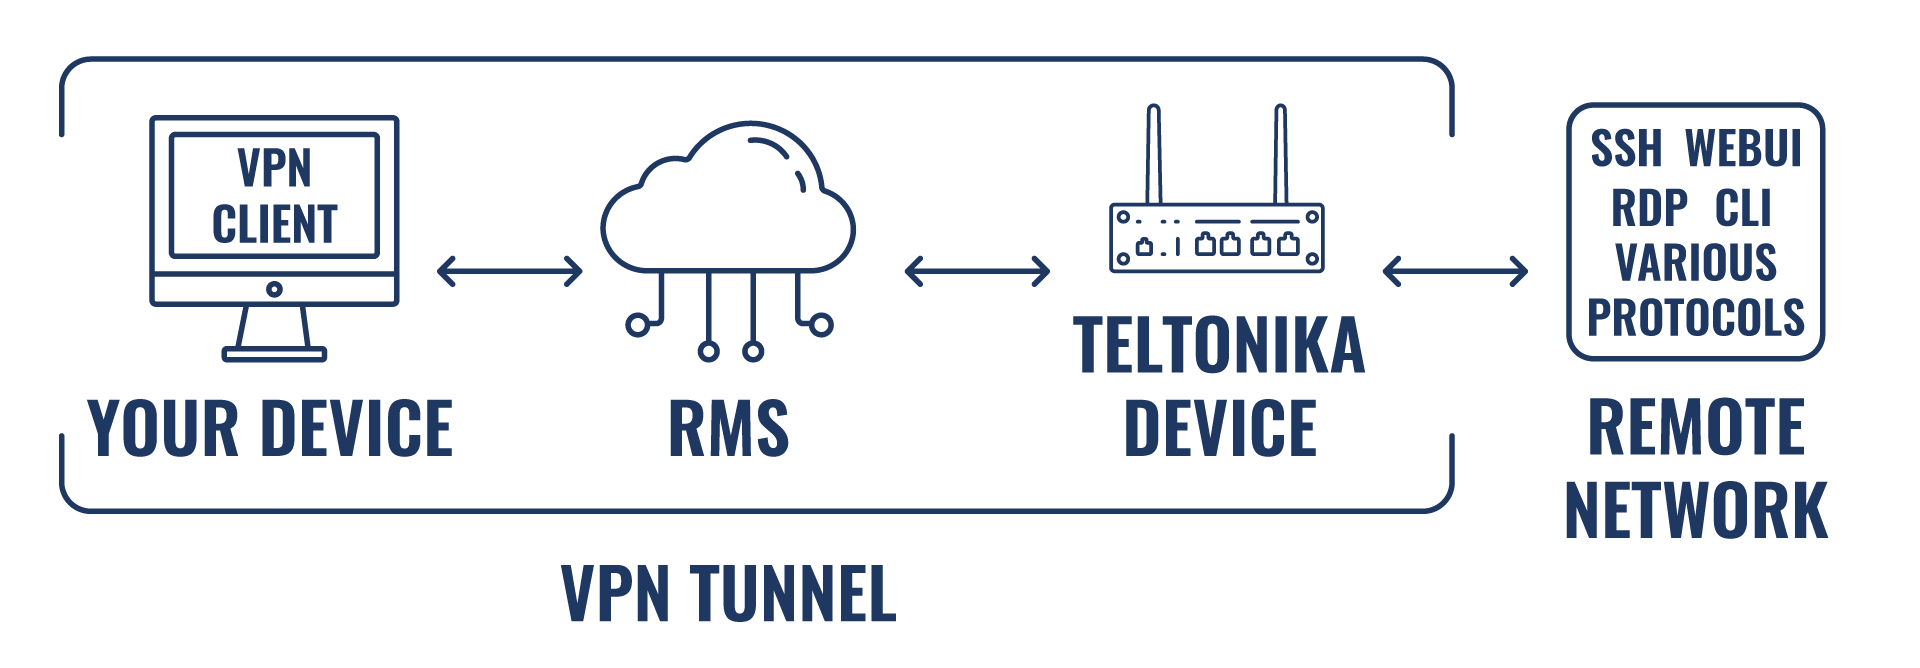 RMS VPN tunnel 1280 v1.png